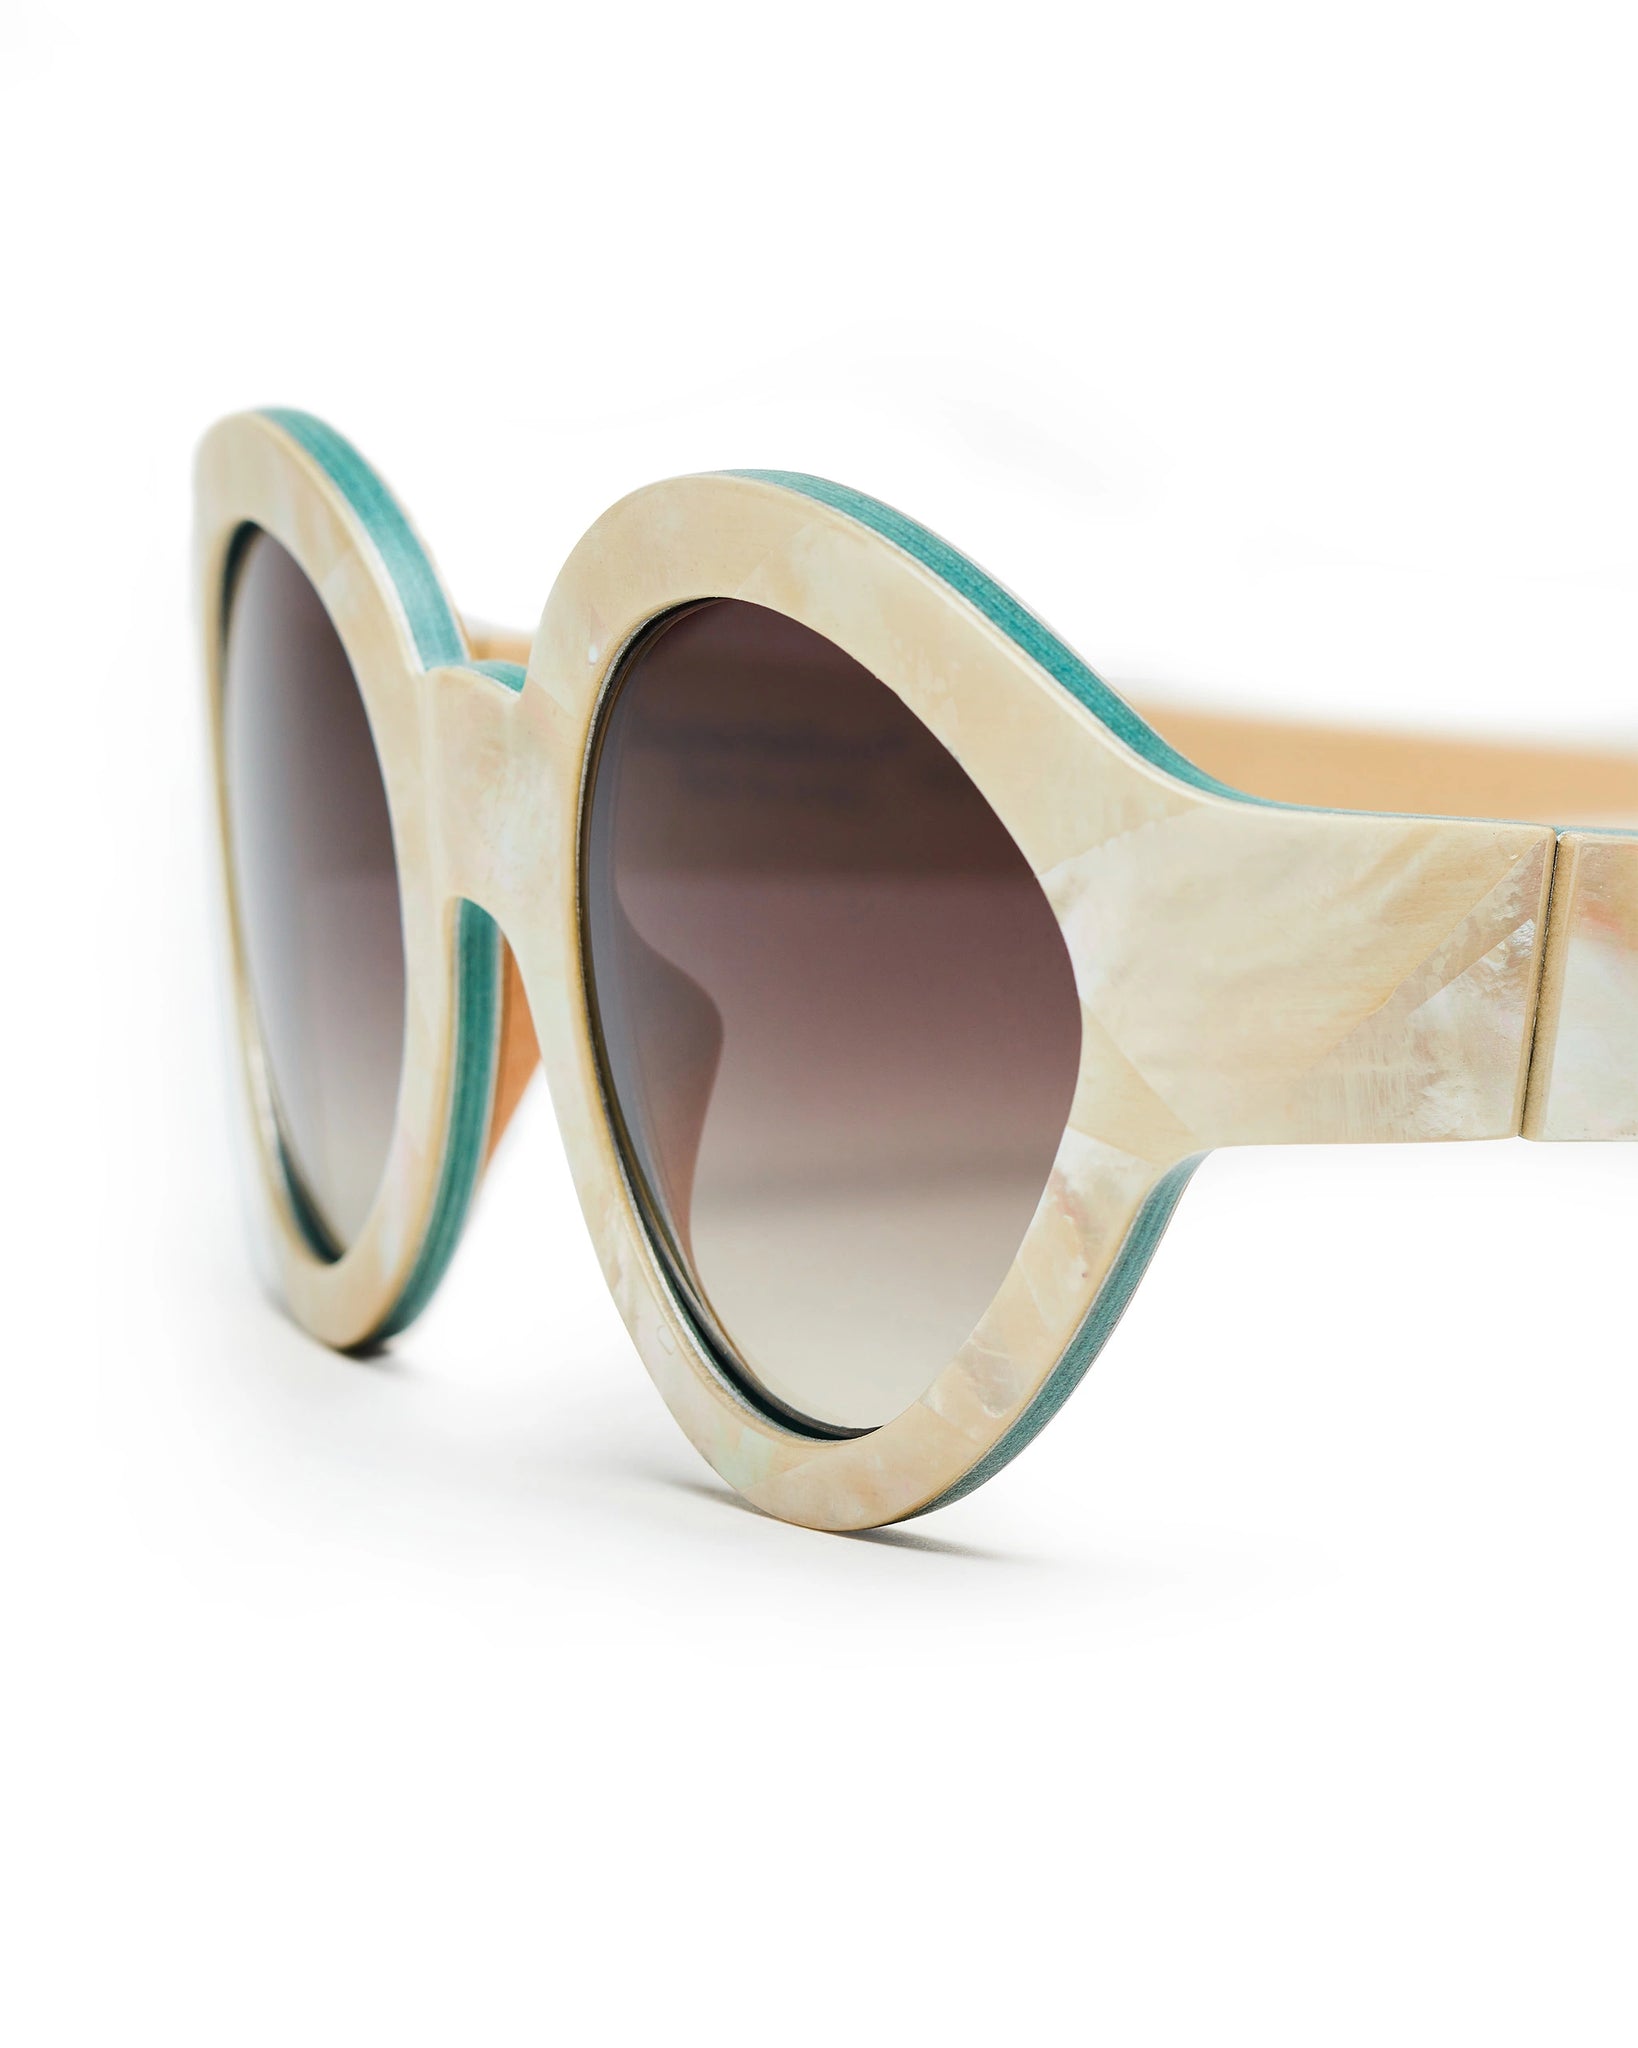 Superlativa® sunglasses model Jawa